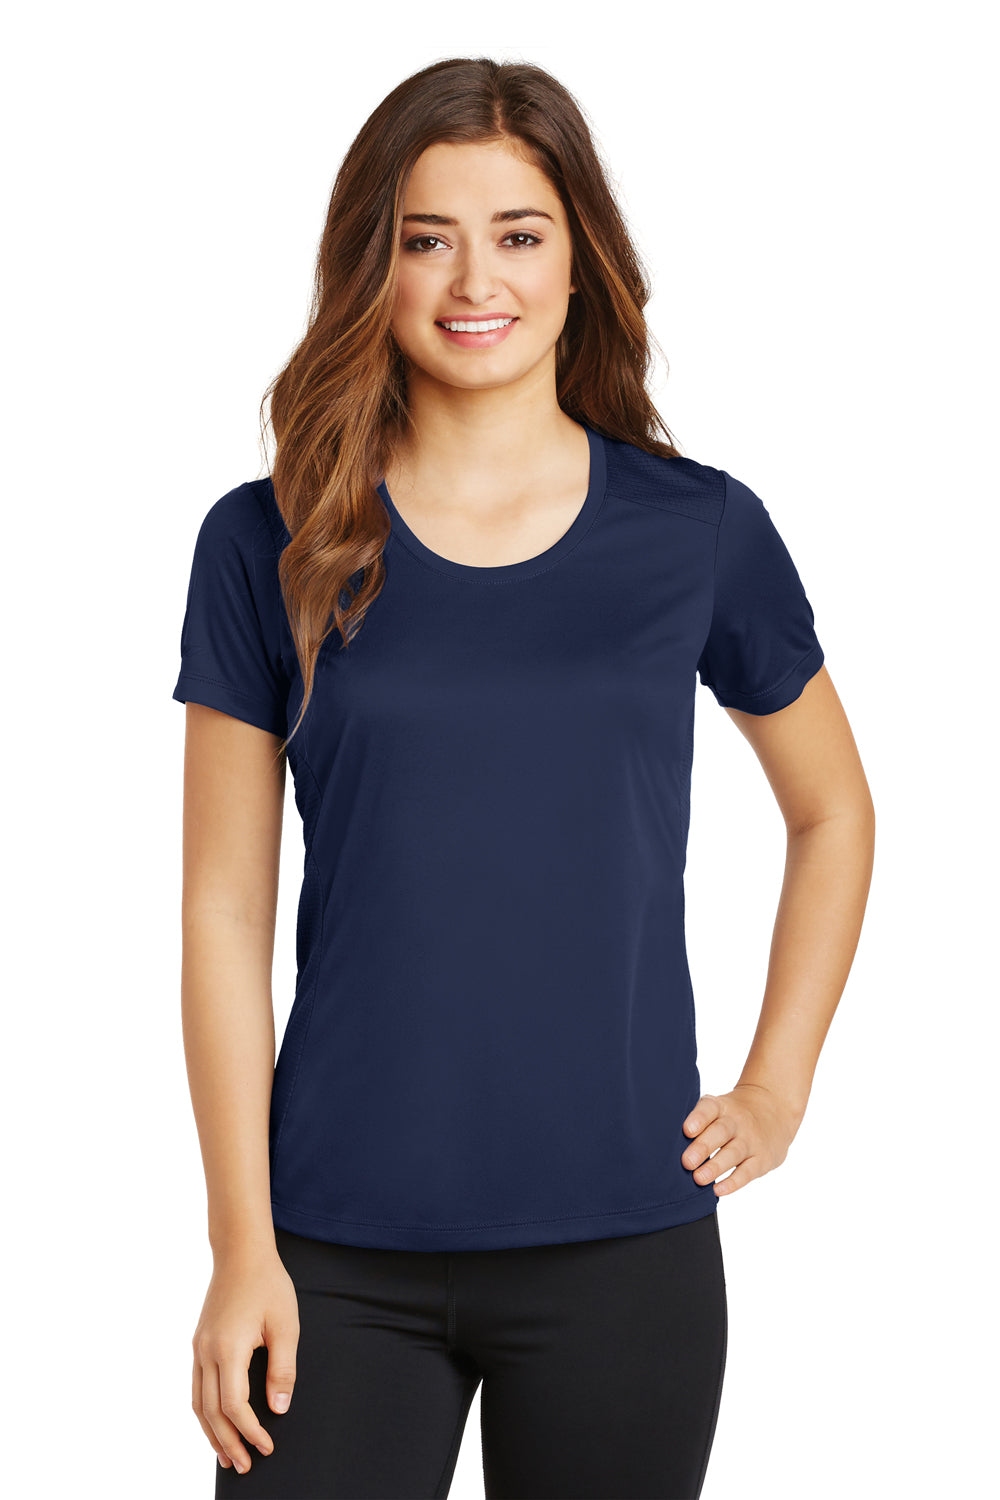 Sport-Tek LST380 Womens Elevate Moisture Wicking Short Sleeve Scoop Neck T-Shirt Navy Blue Front